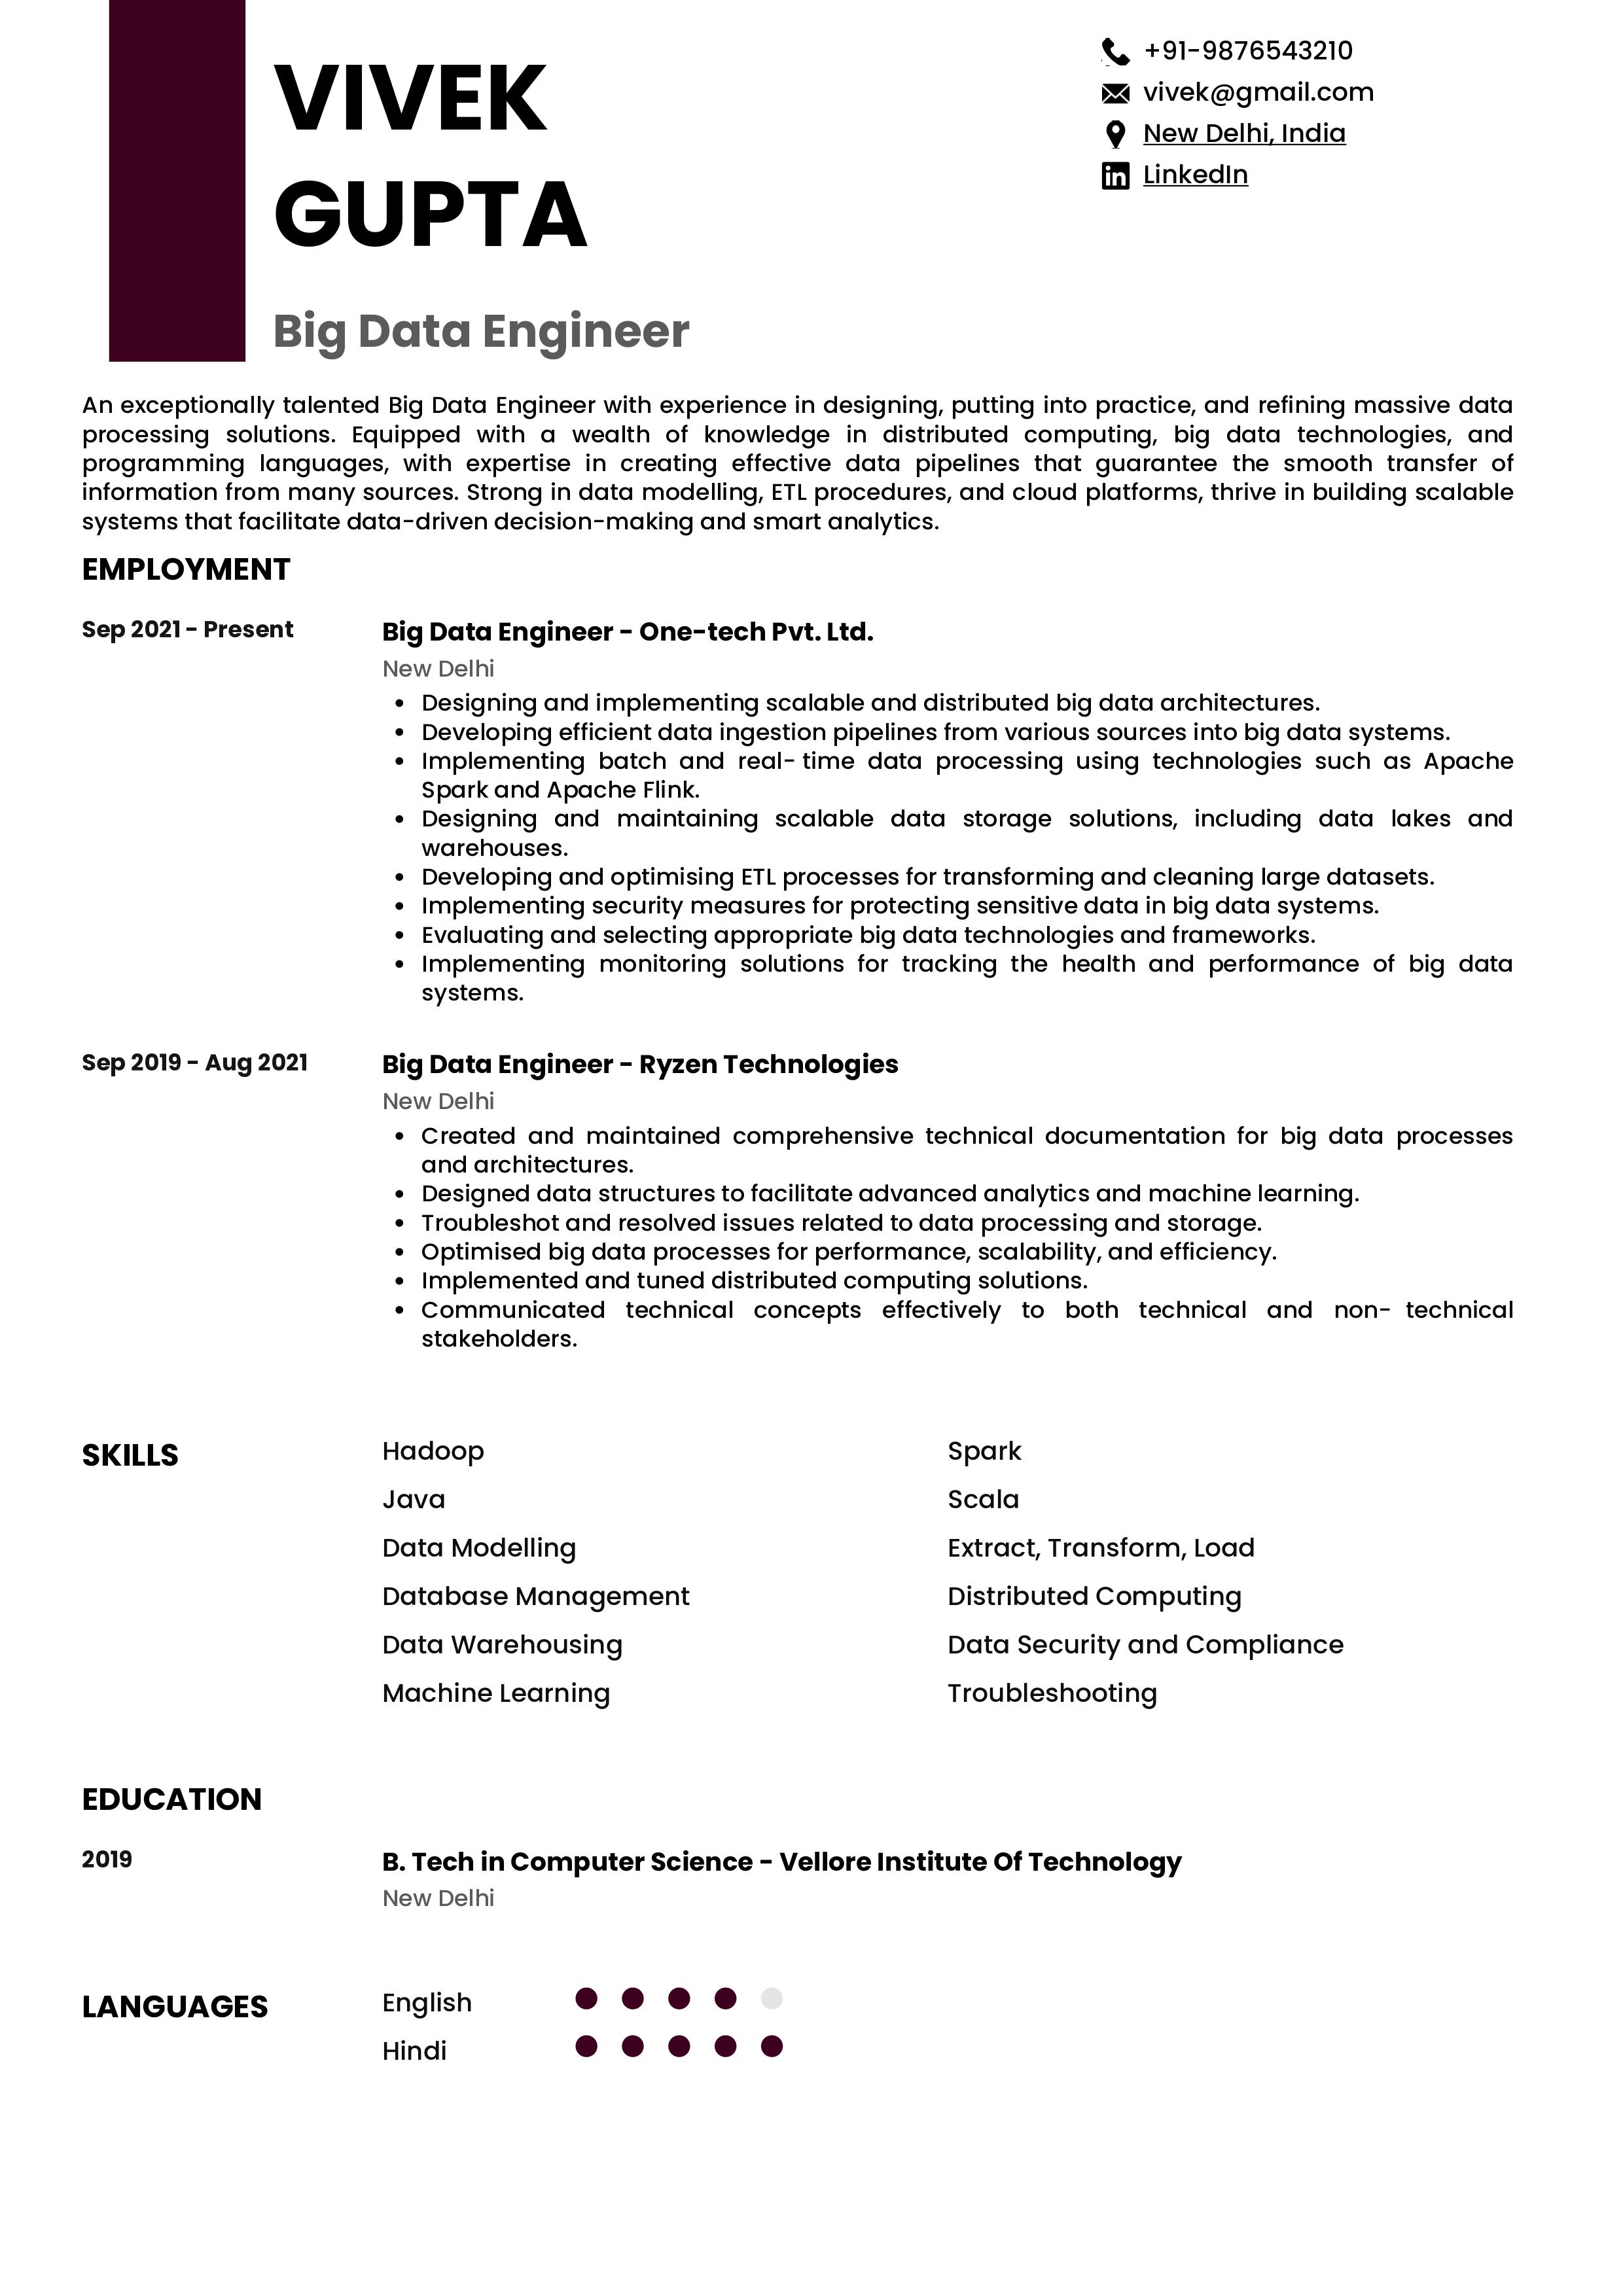 Sample Resume of Big Data Engineer | Free Resume Templates & Samples on Resumod.co